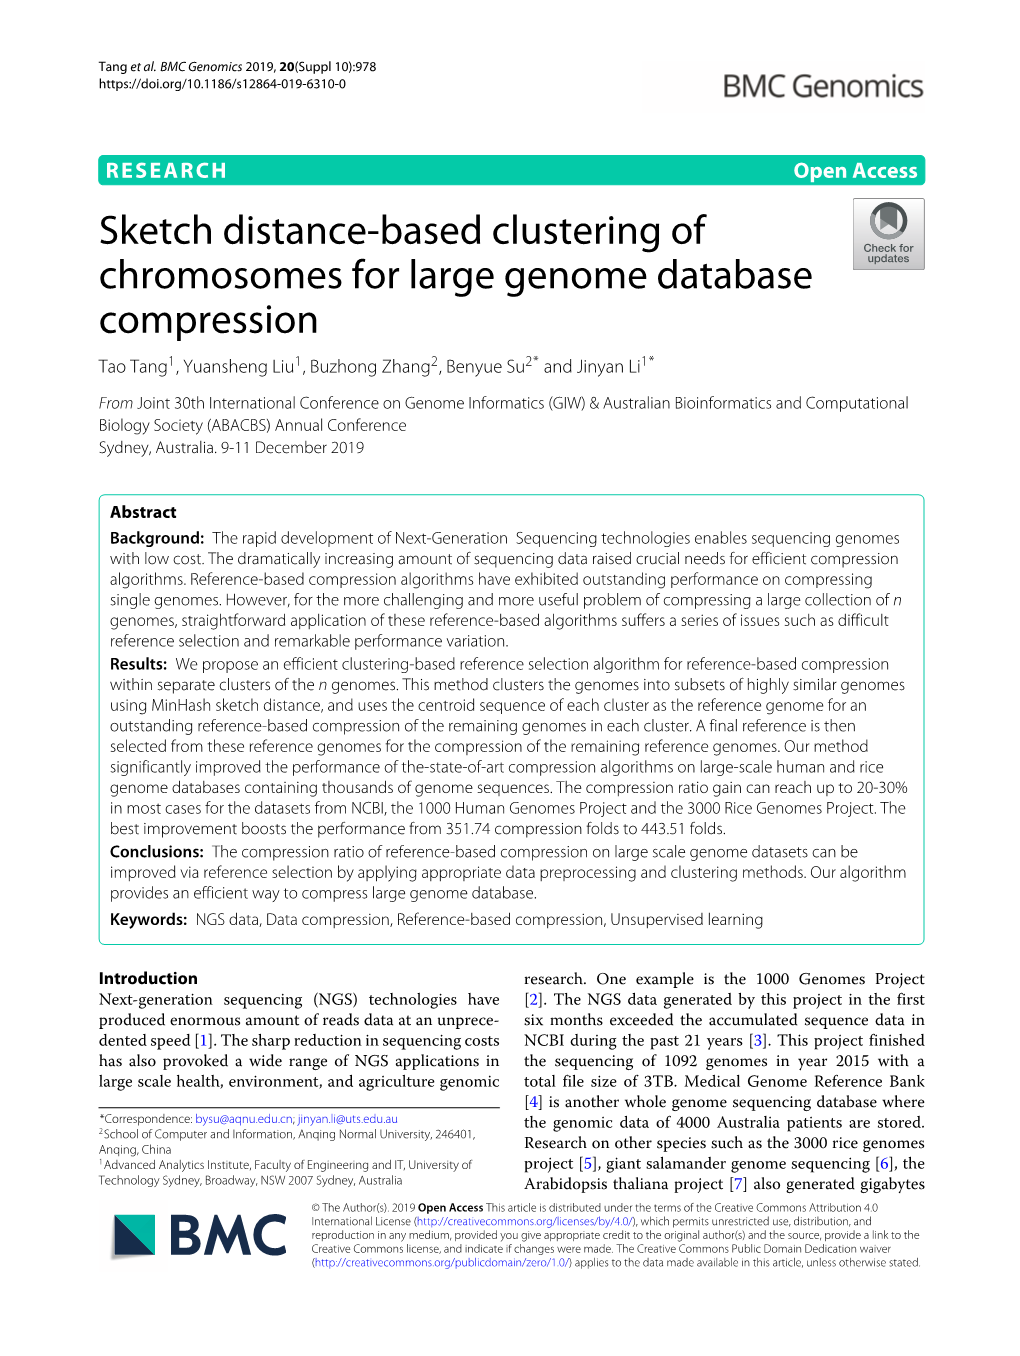 Sketch Distance-Based Clustering of Chromosomes for Large Genome Database Compression Tao Tang1, Yuansheng Liu1, Buzhong Zhang2, Benyue Su2* and Jinyan Li1*